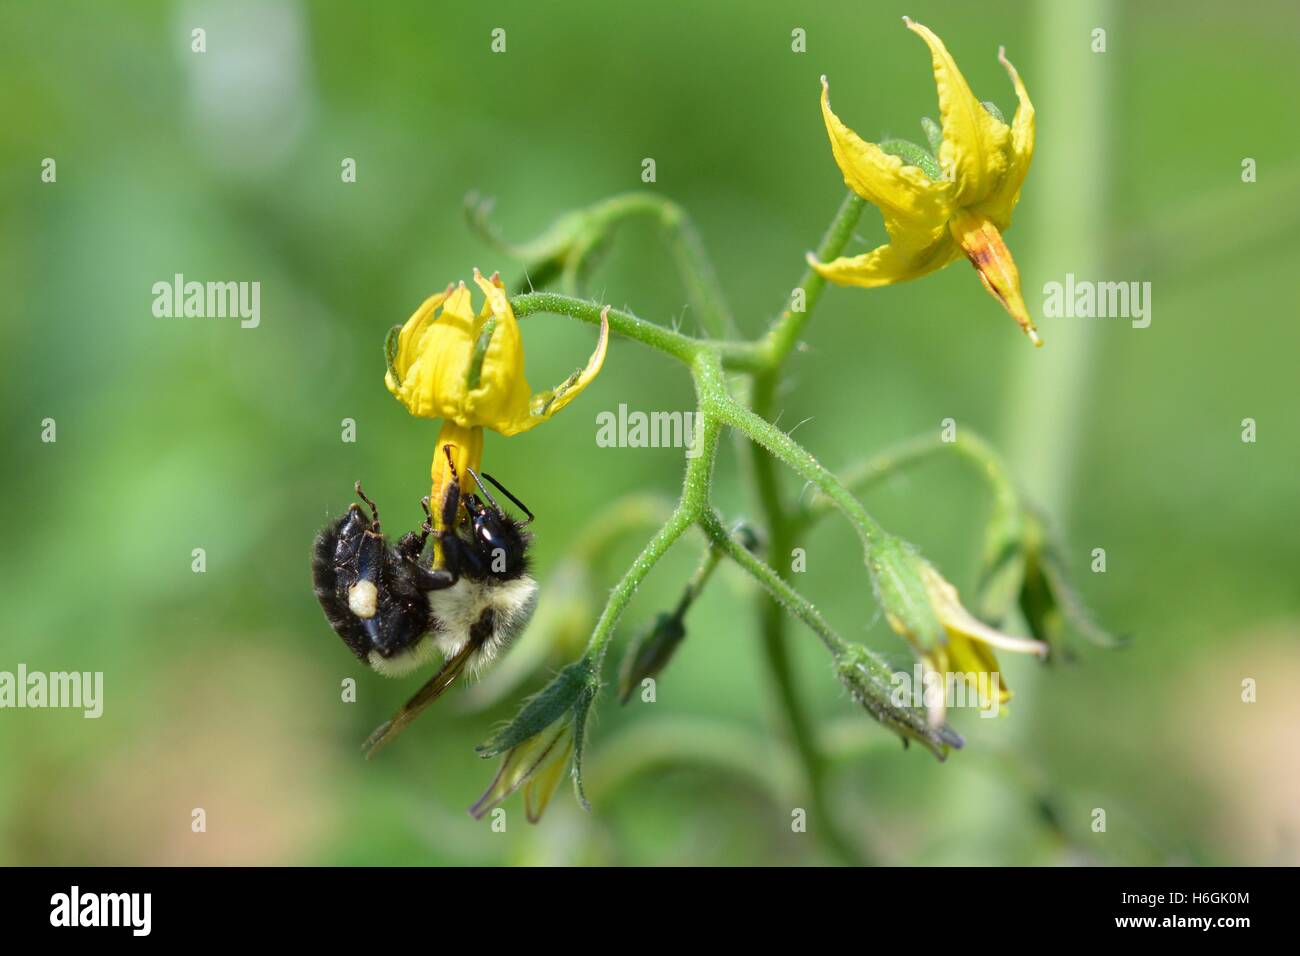 Common Eastern bumble bee (Bombus impatiens) buzz pollinating tomato flower (Solanum sp.). Stock Photo